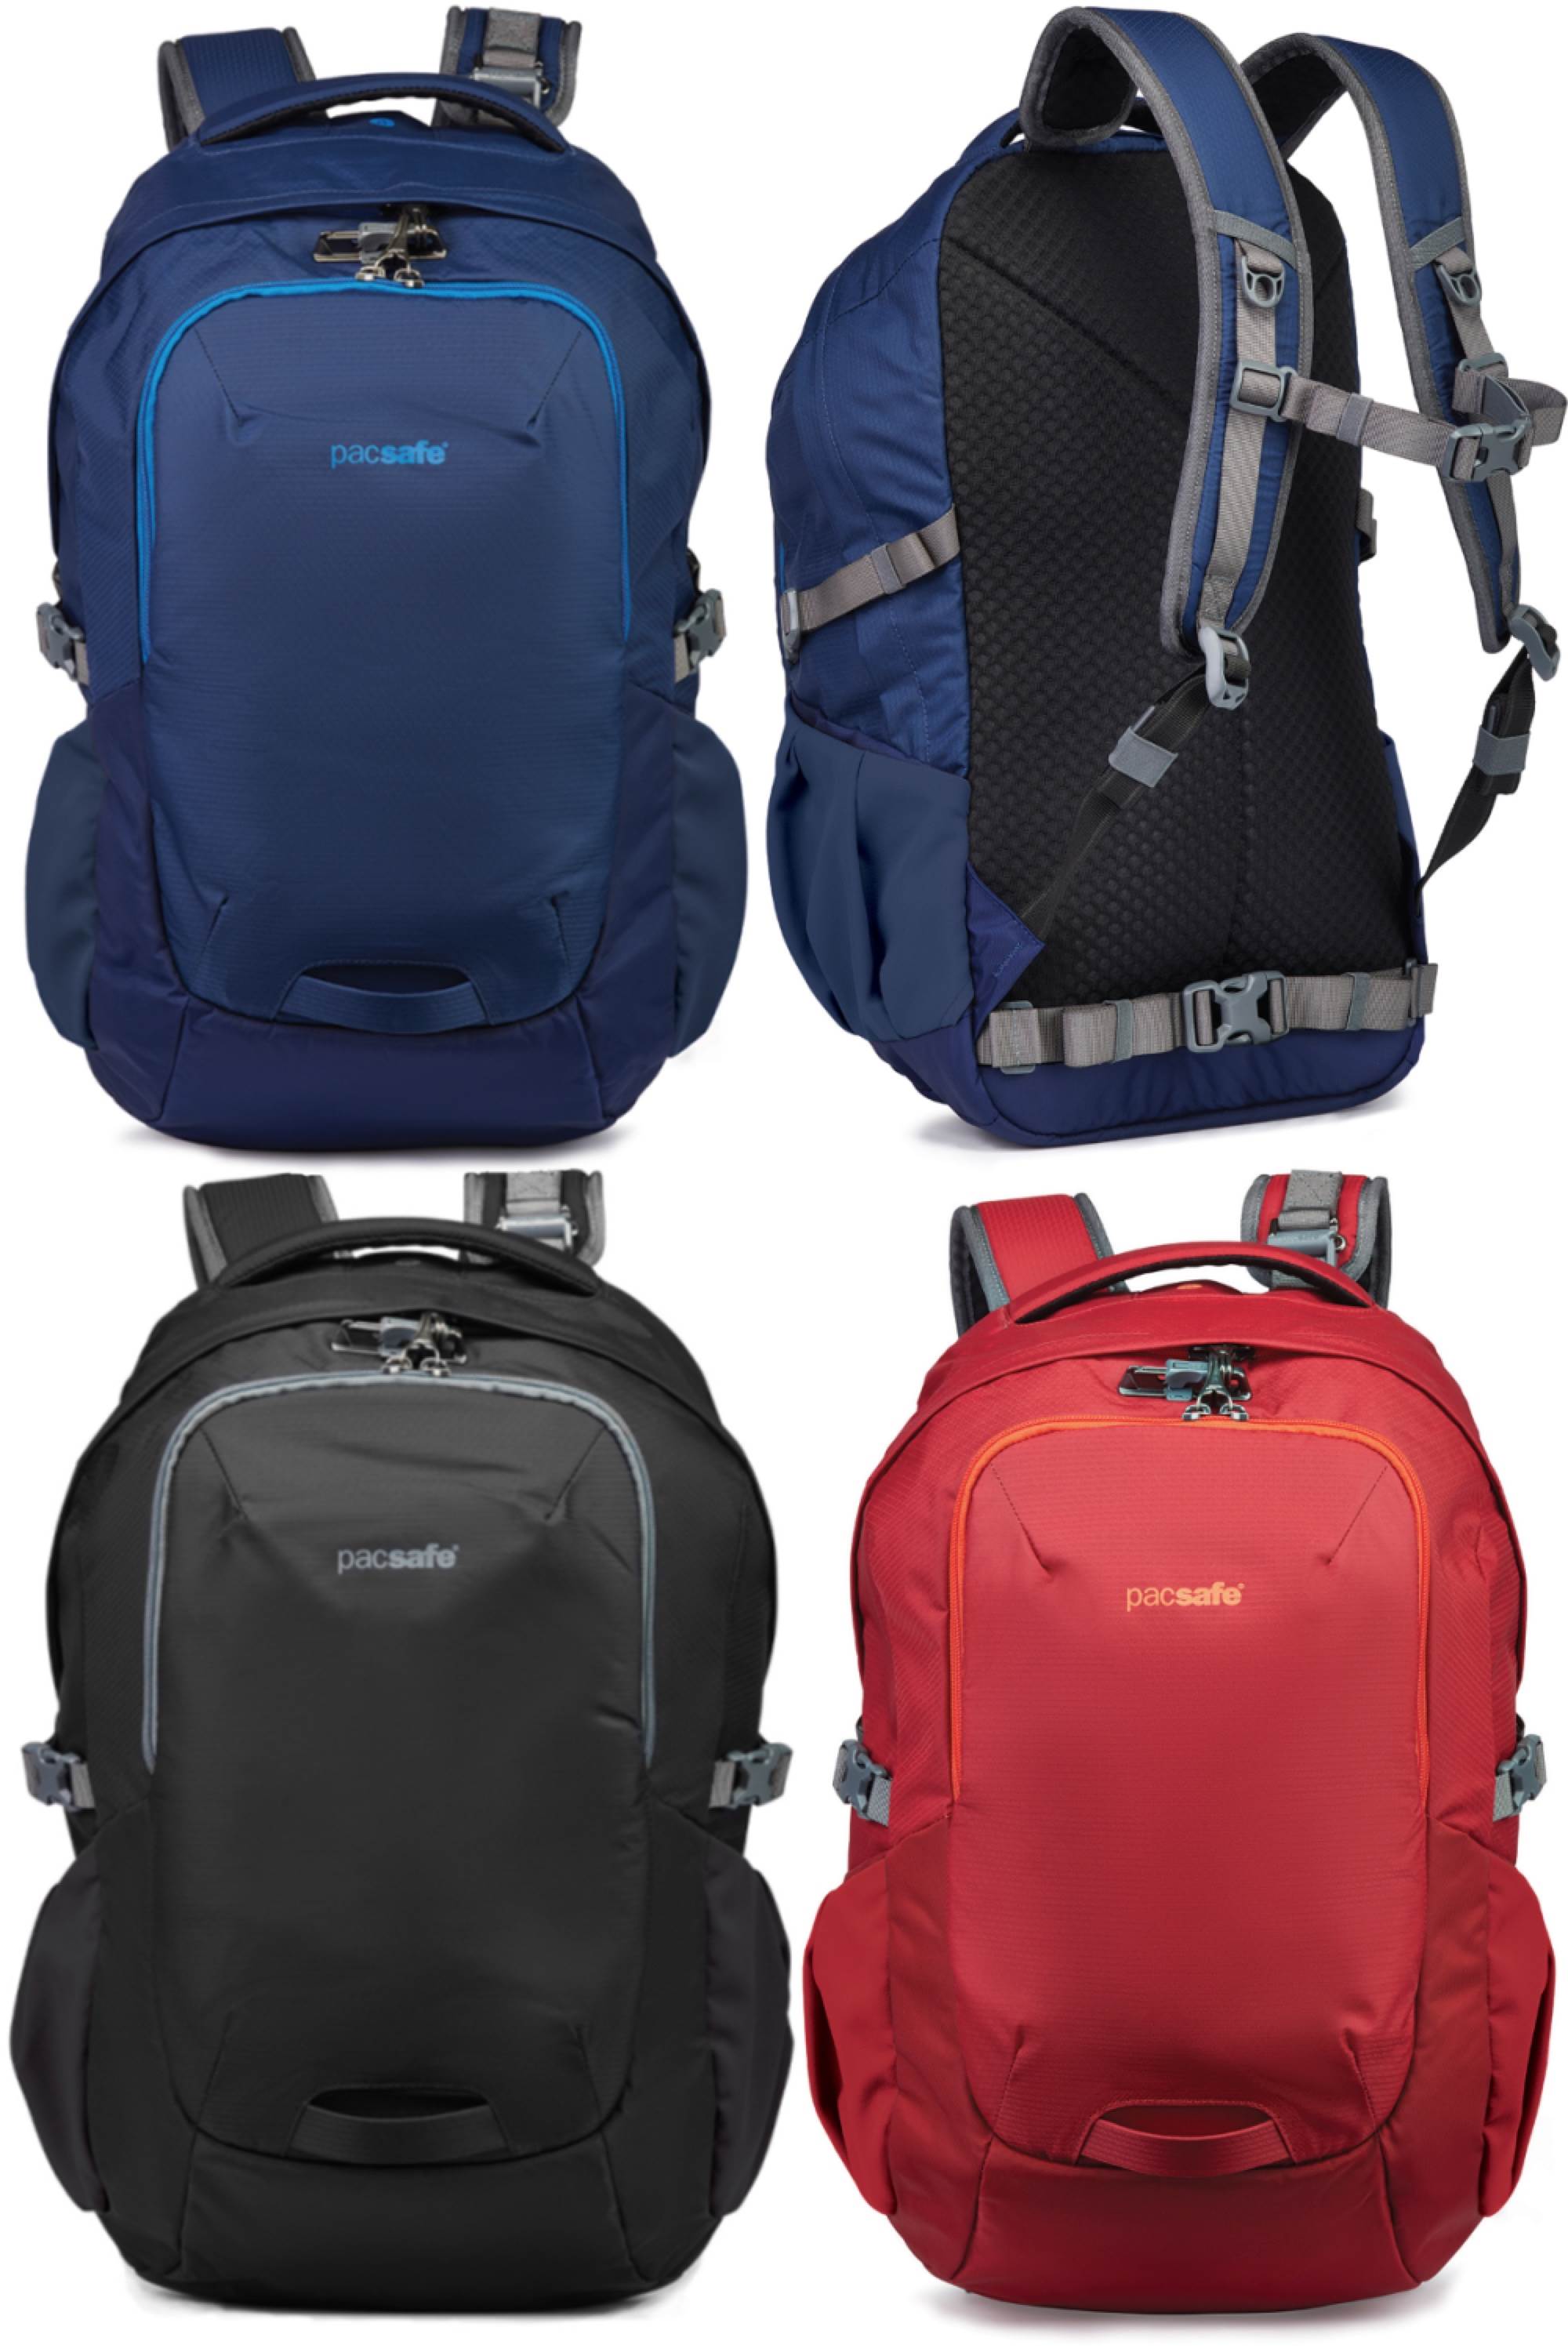 PacSafe Venturesafe G3 32 Liter Anti Theft Travel Backpack/Daypack-Fits 17 Laptop Lakeside Blue 